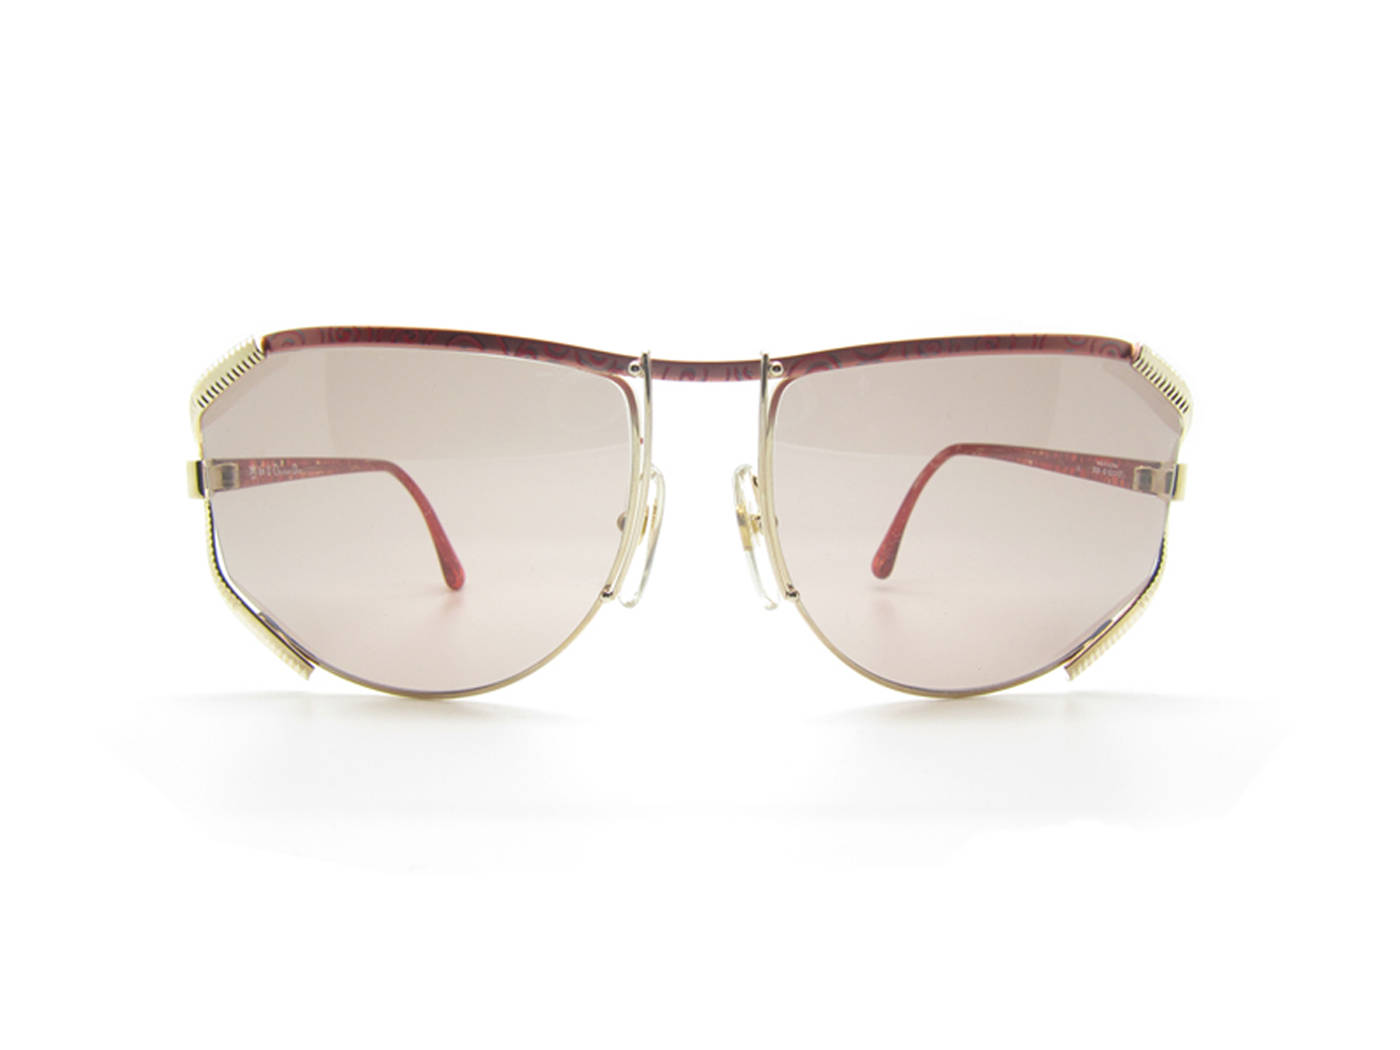 Christian Dior Sunglasses For Women Picture